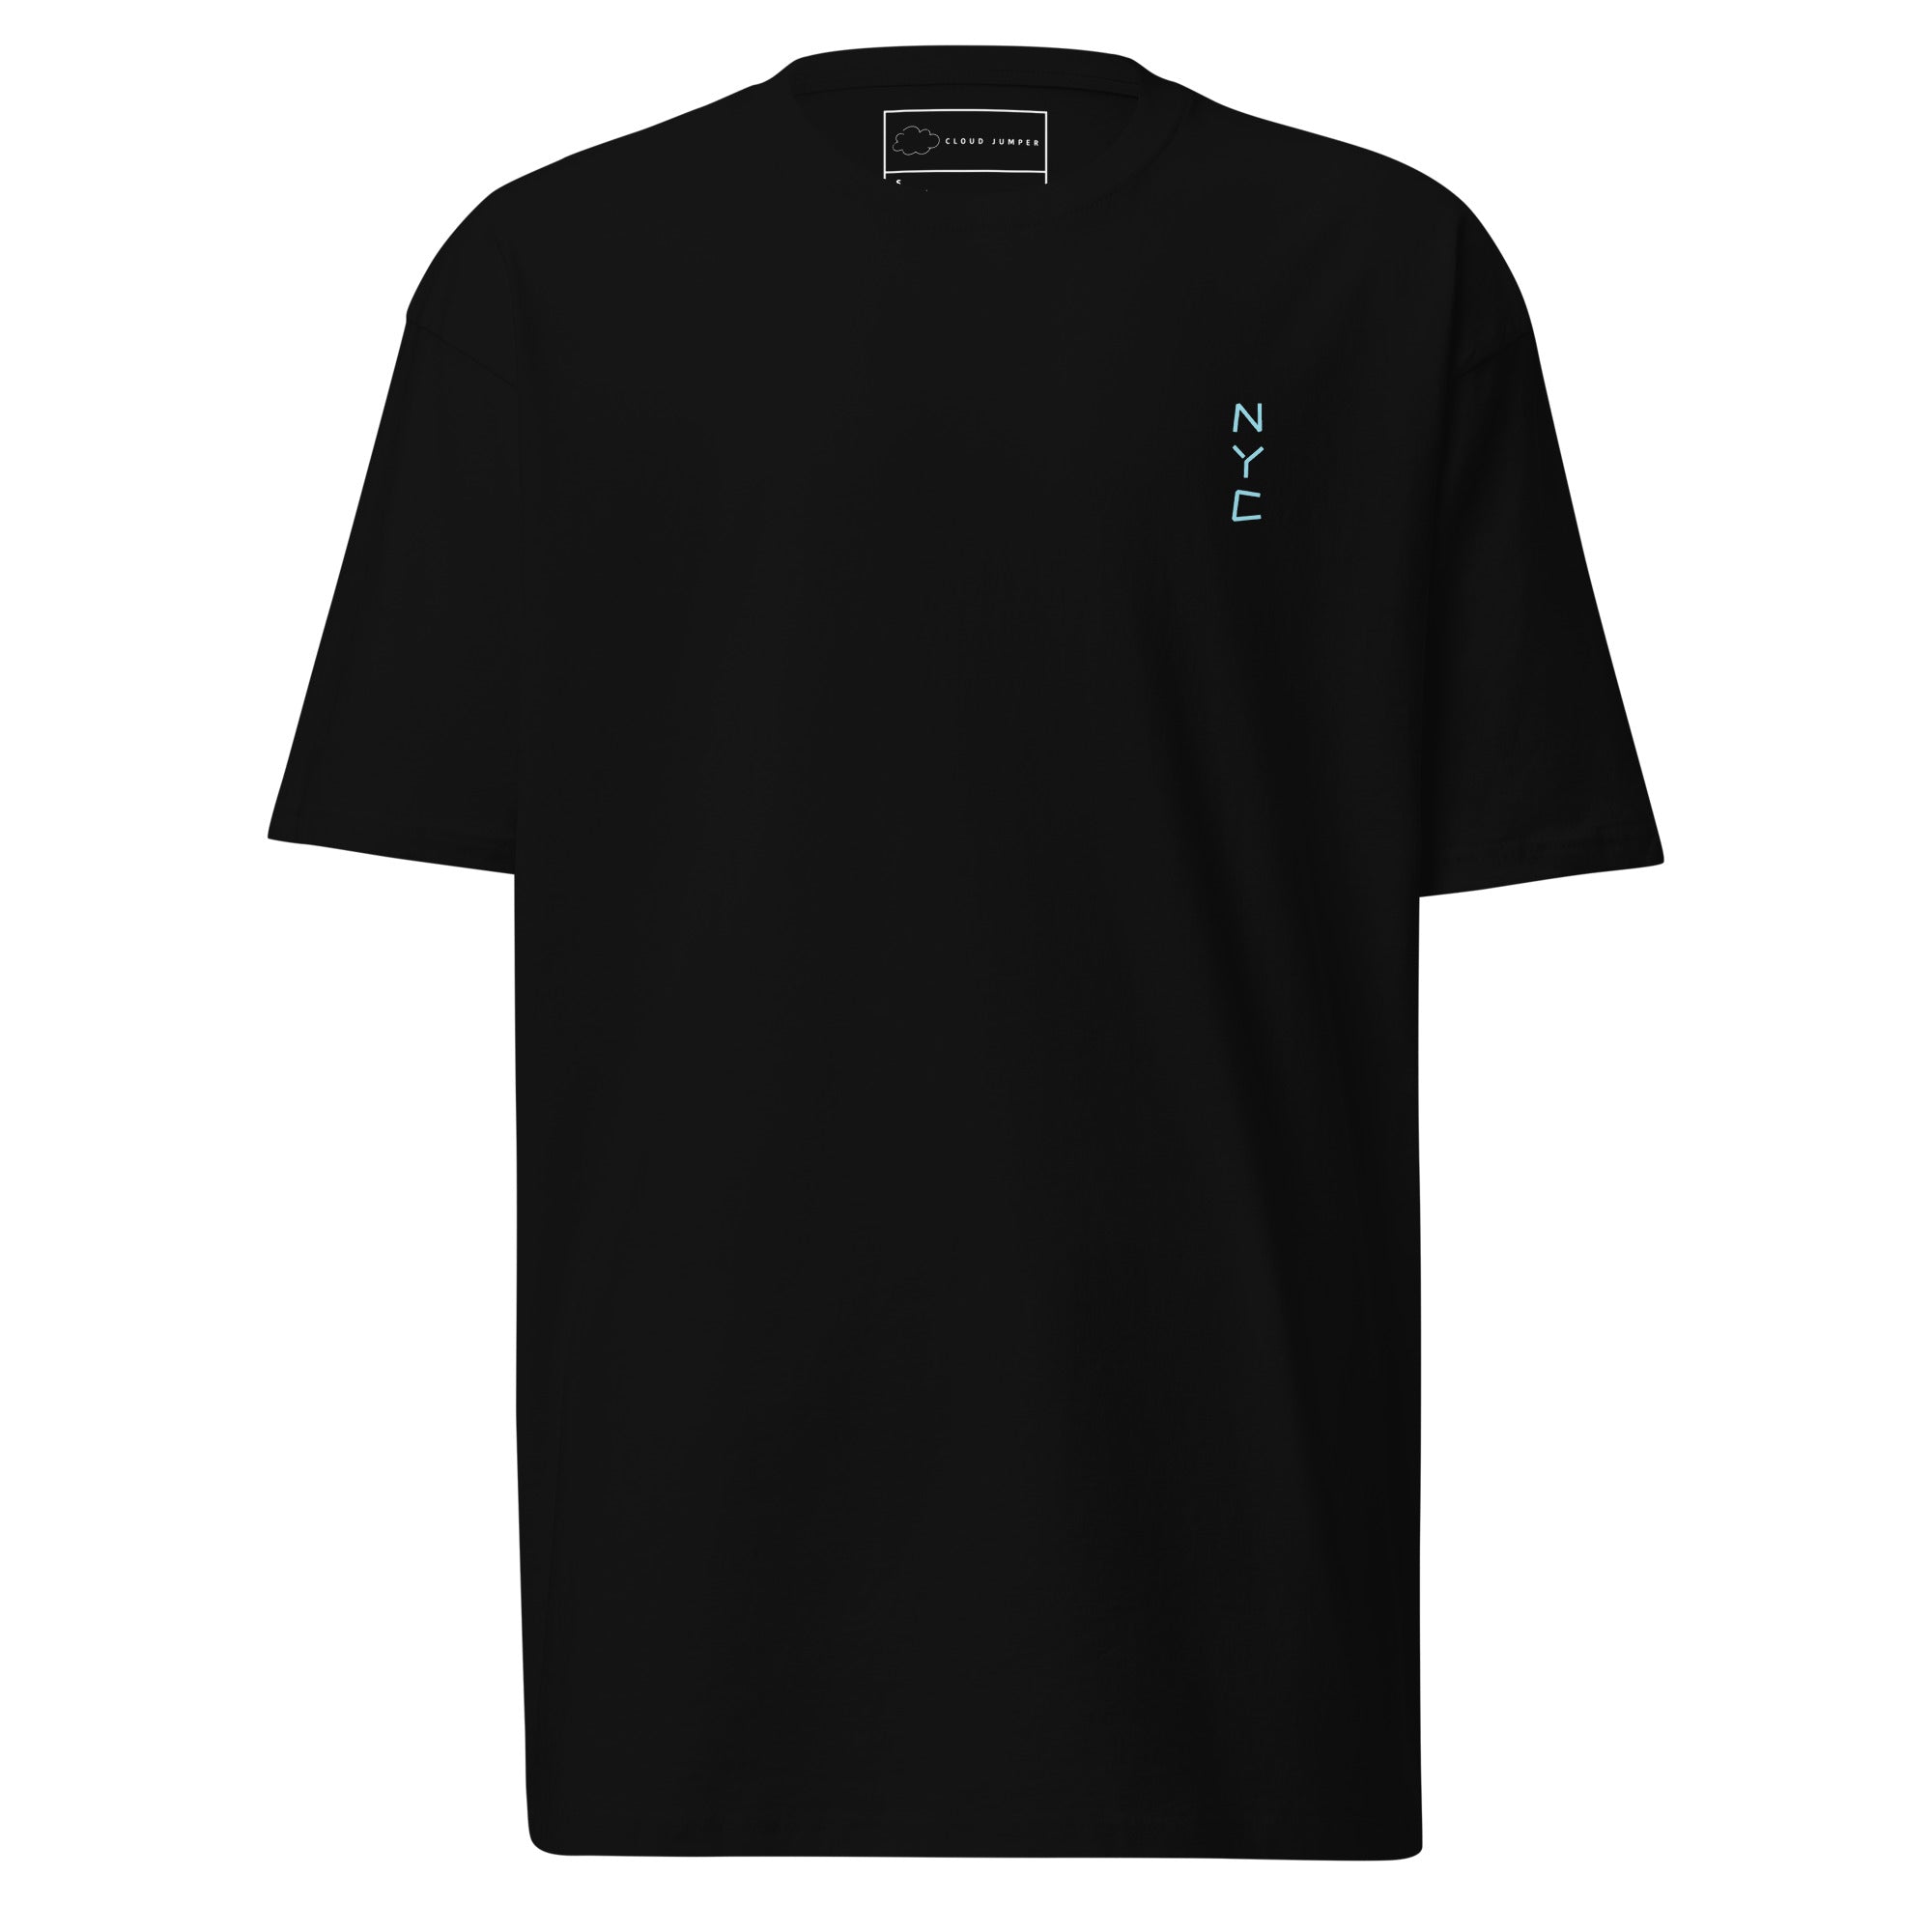 The NYC T-shirt – Cloud Jumper